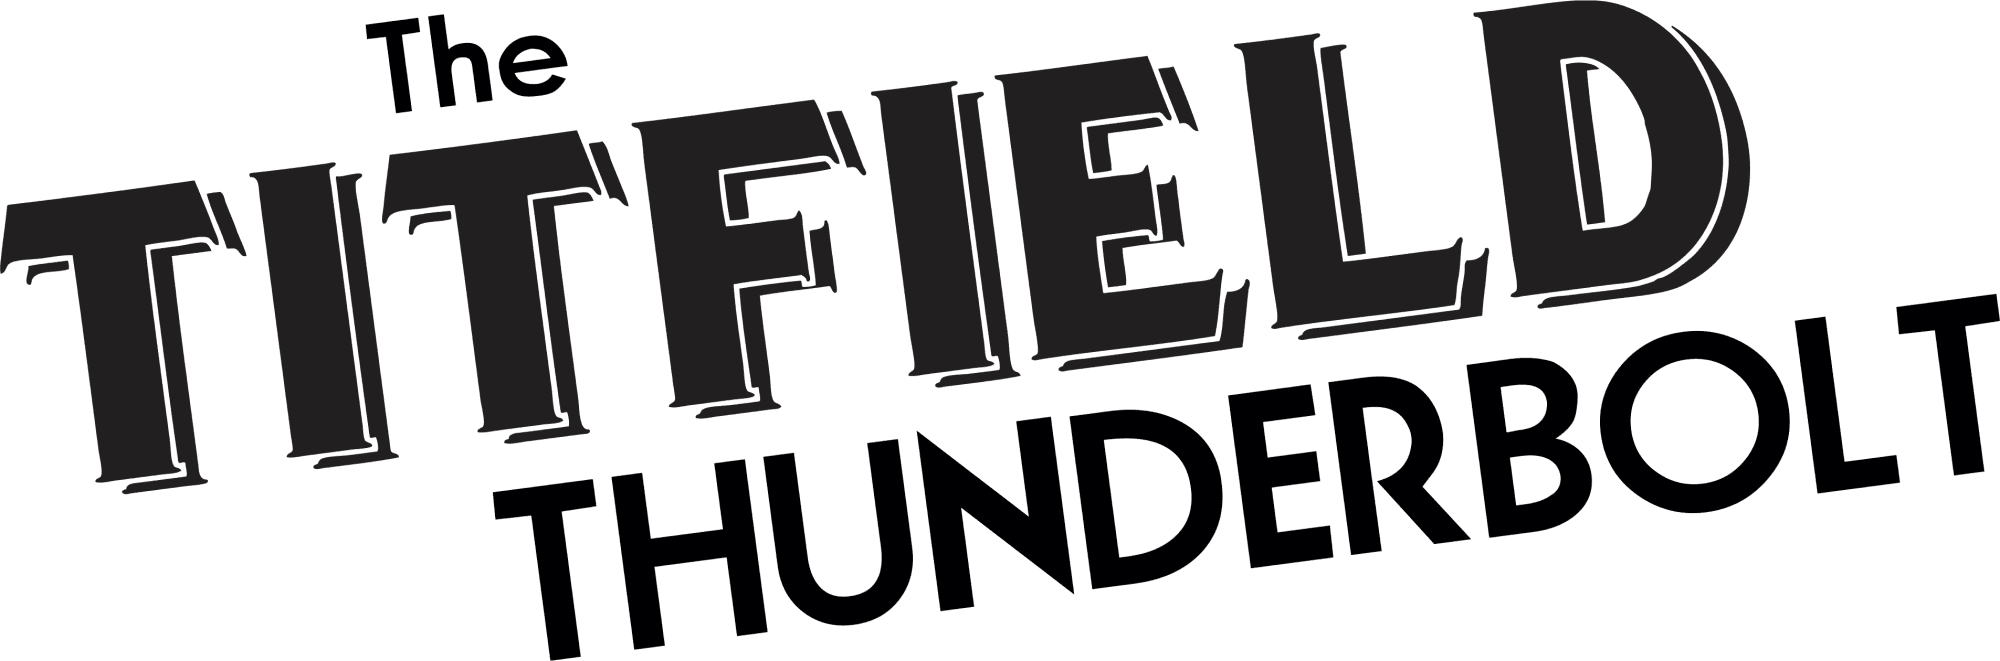 The Titfield Thunderbolt logo